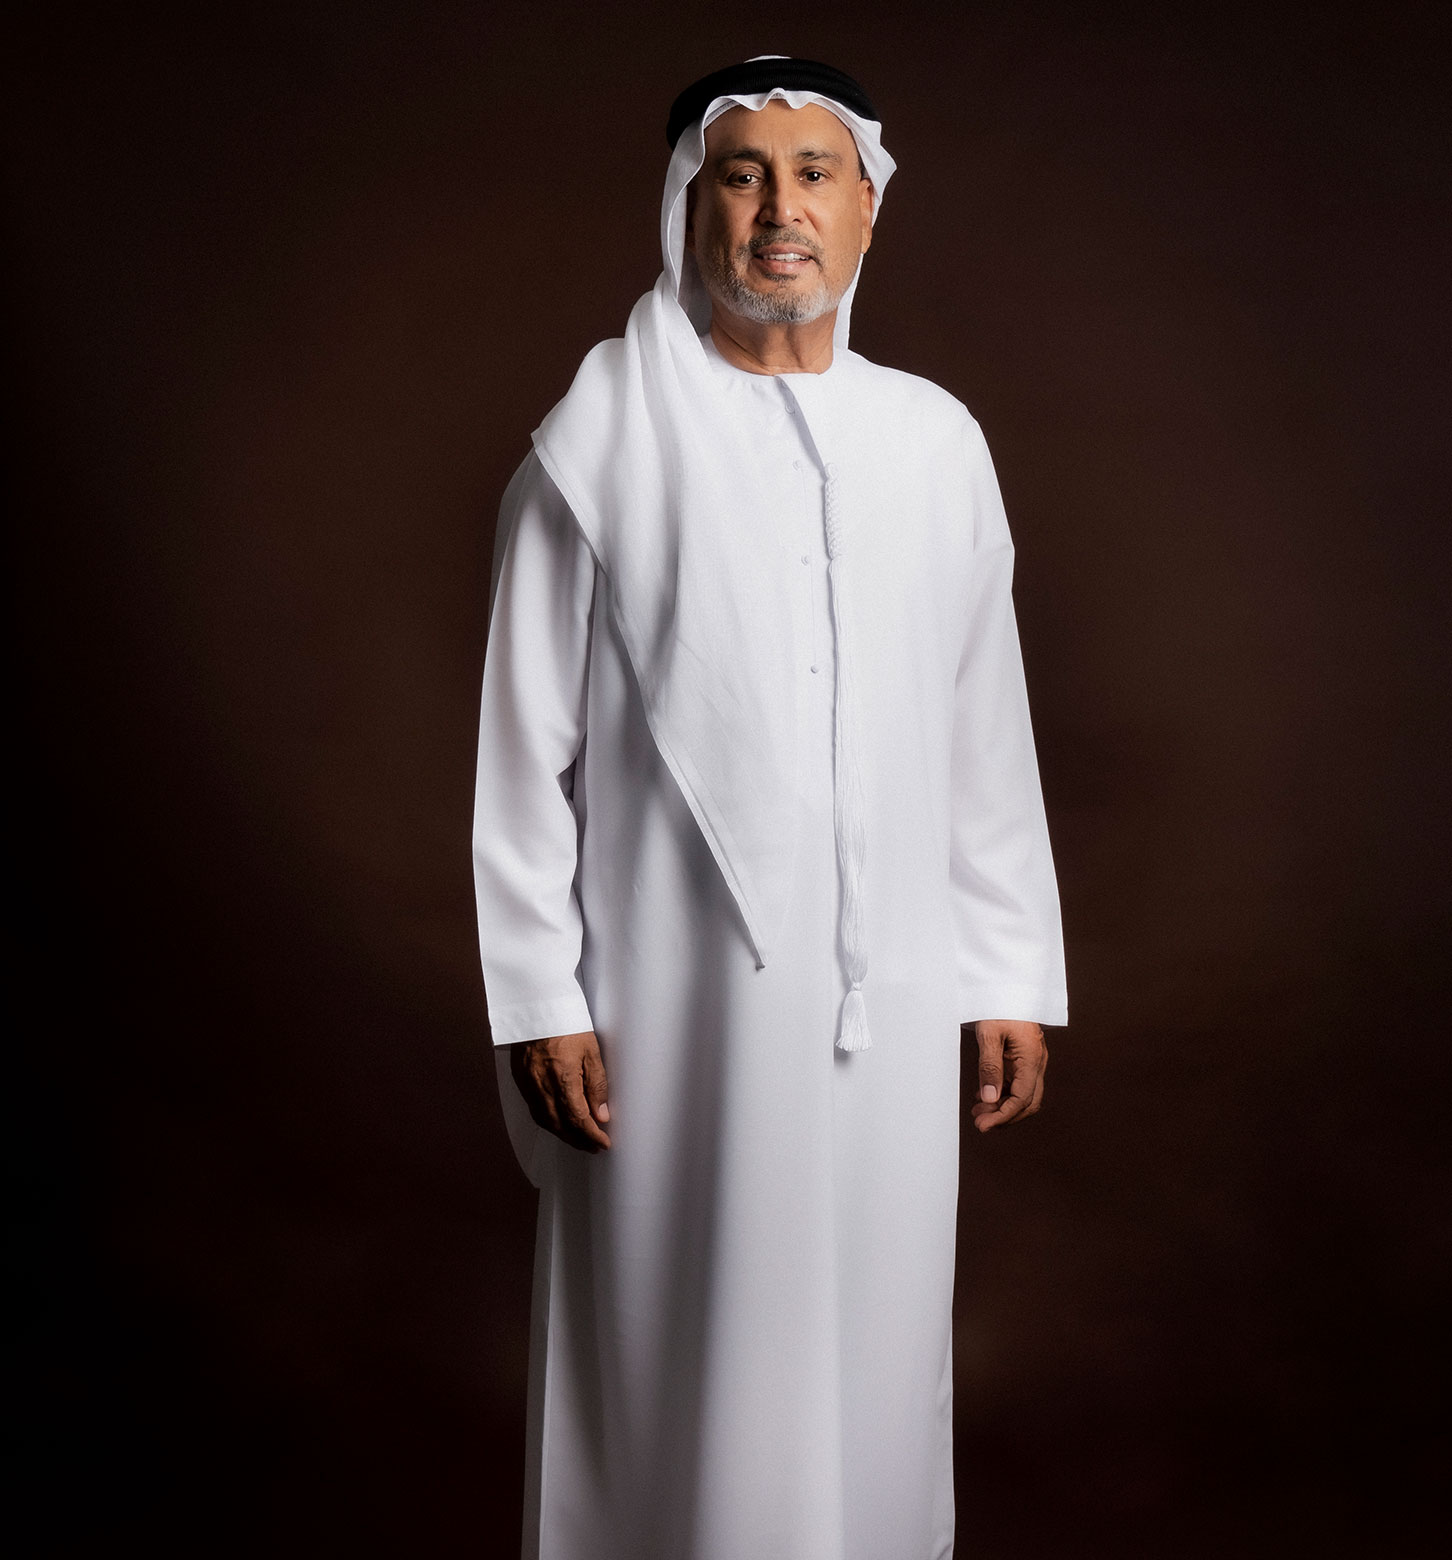 Chairman of Seddiqi Holding, Abdul Hamied Seddiqi